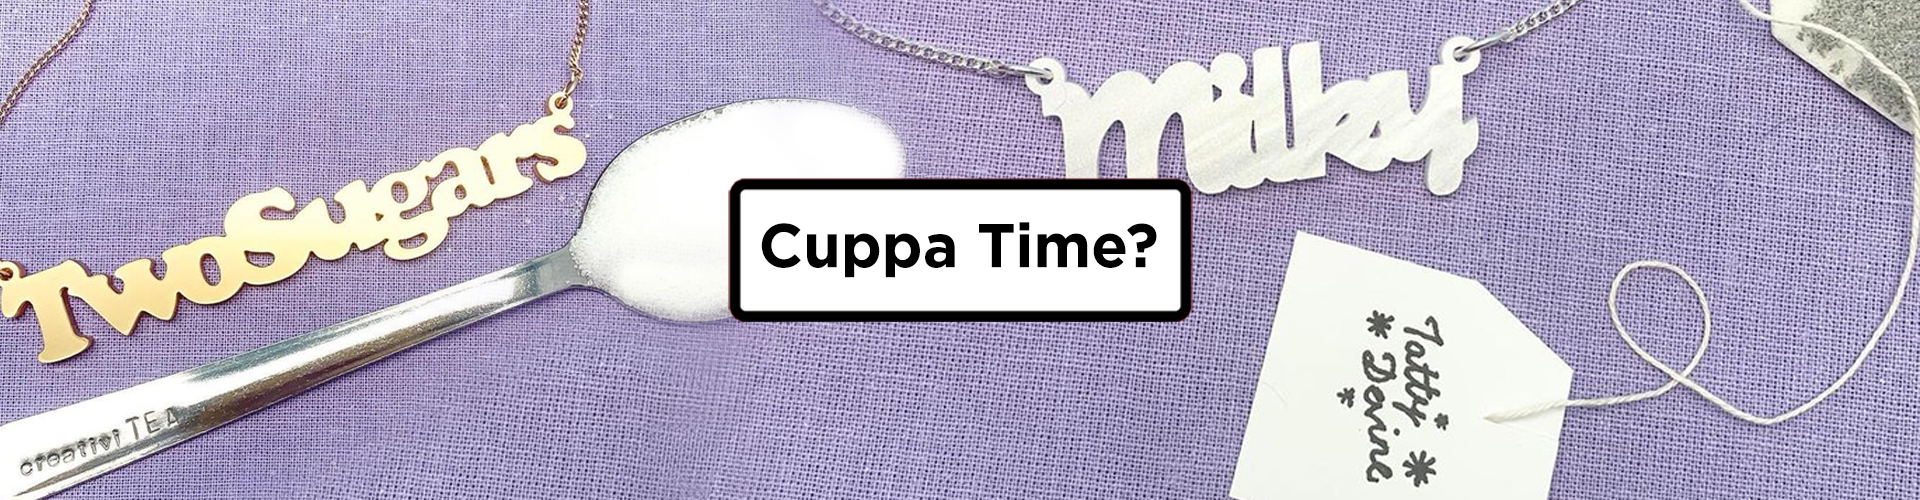 Cuppa Time?